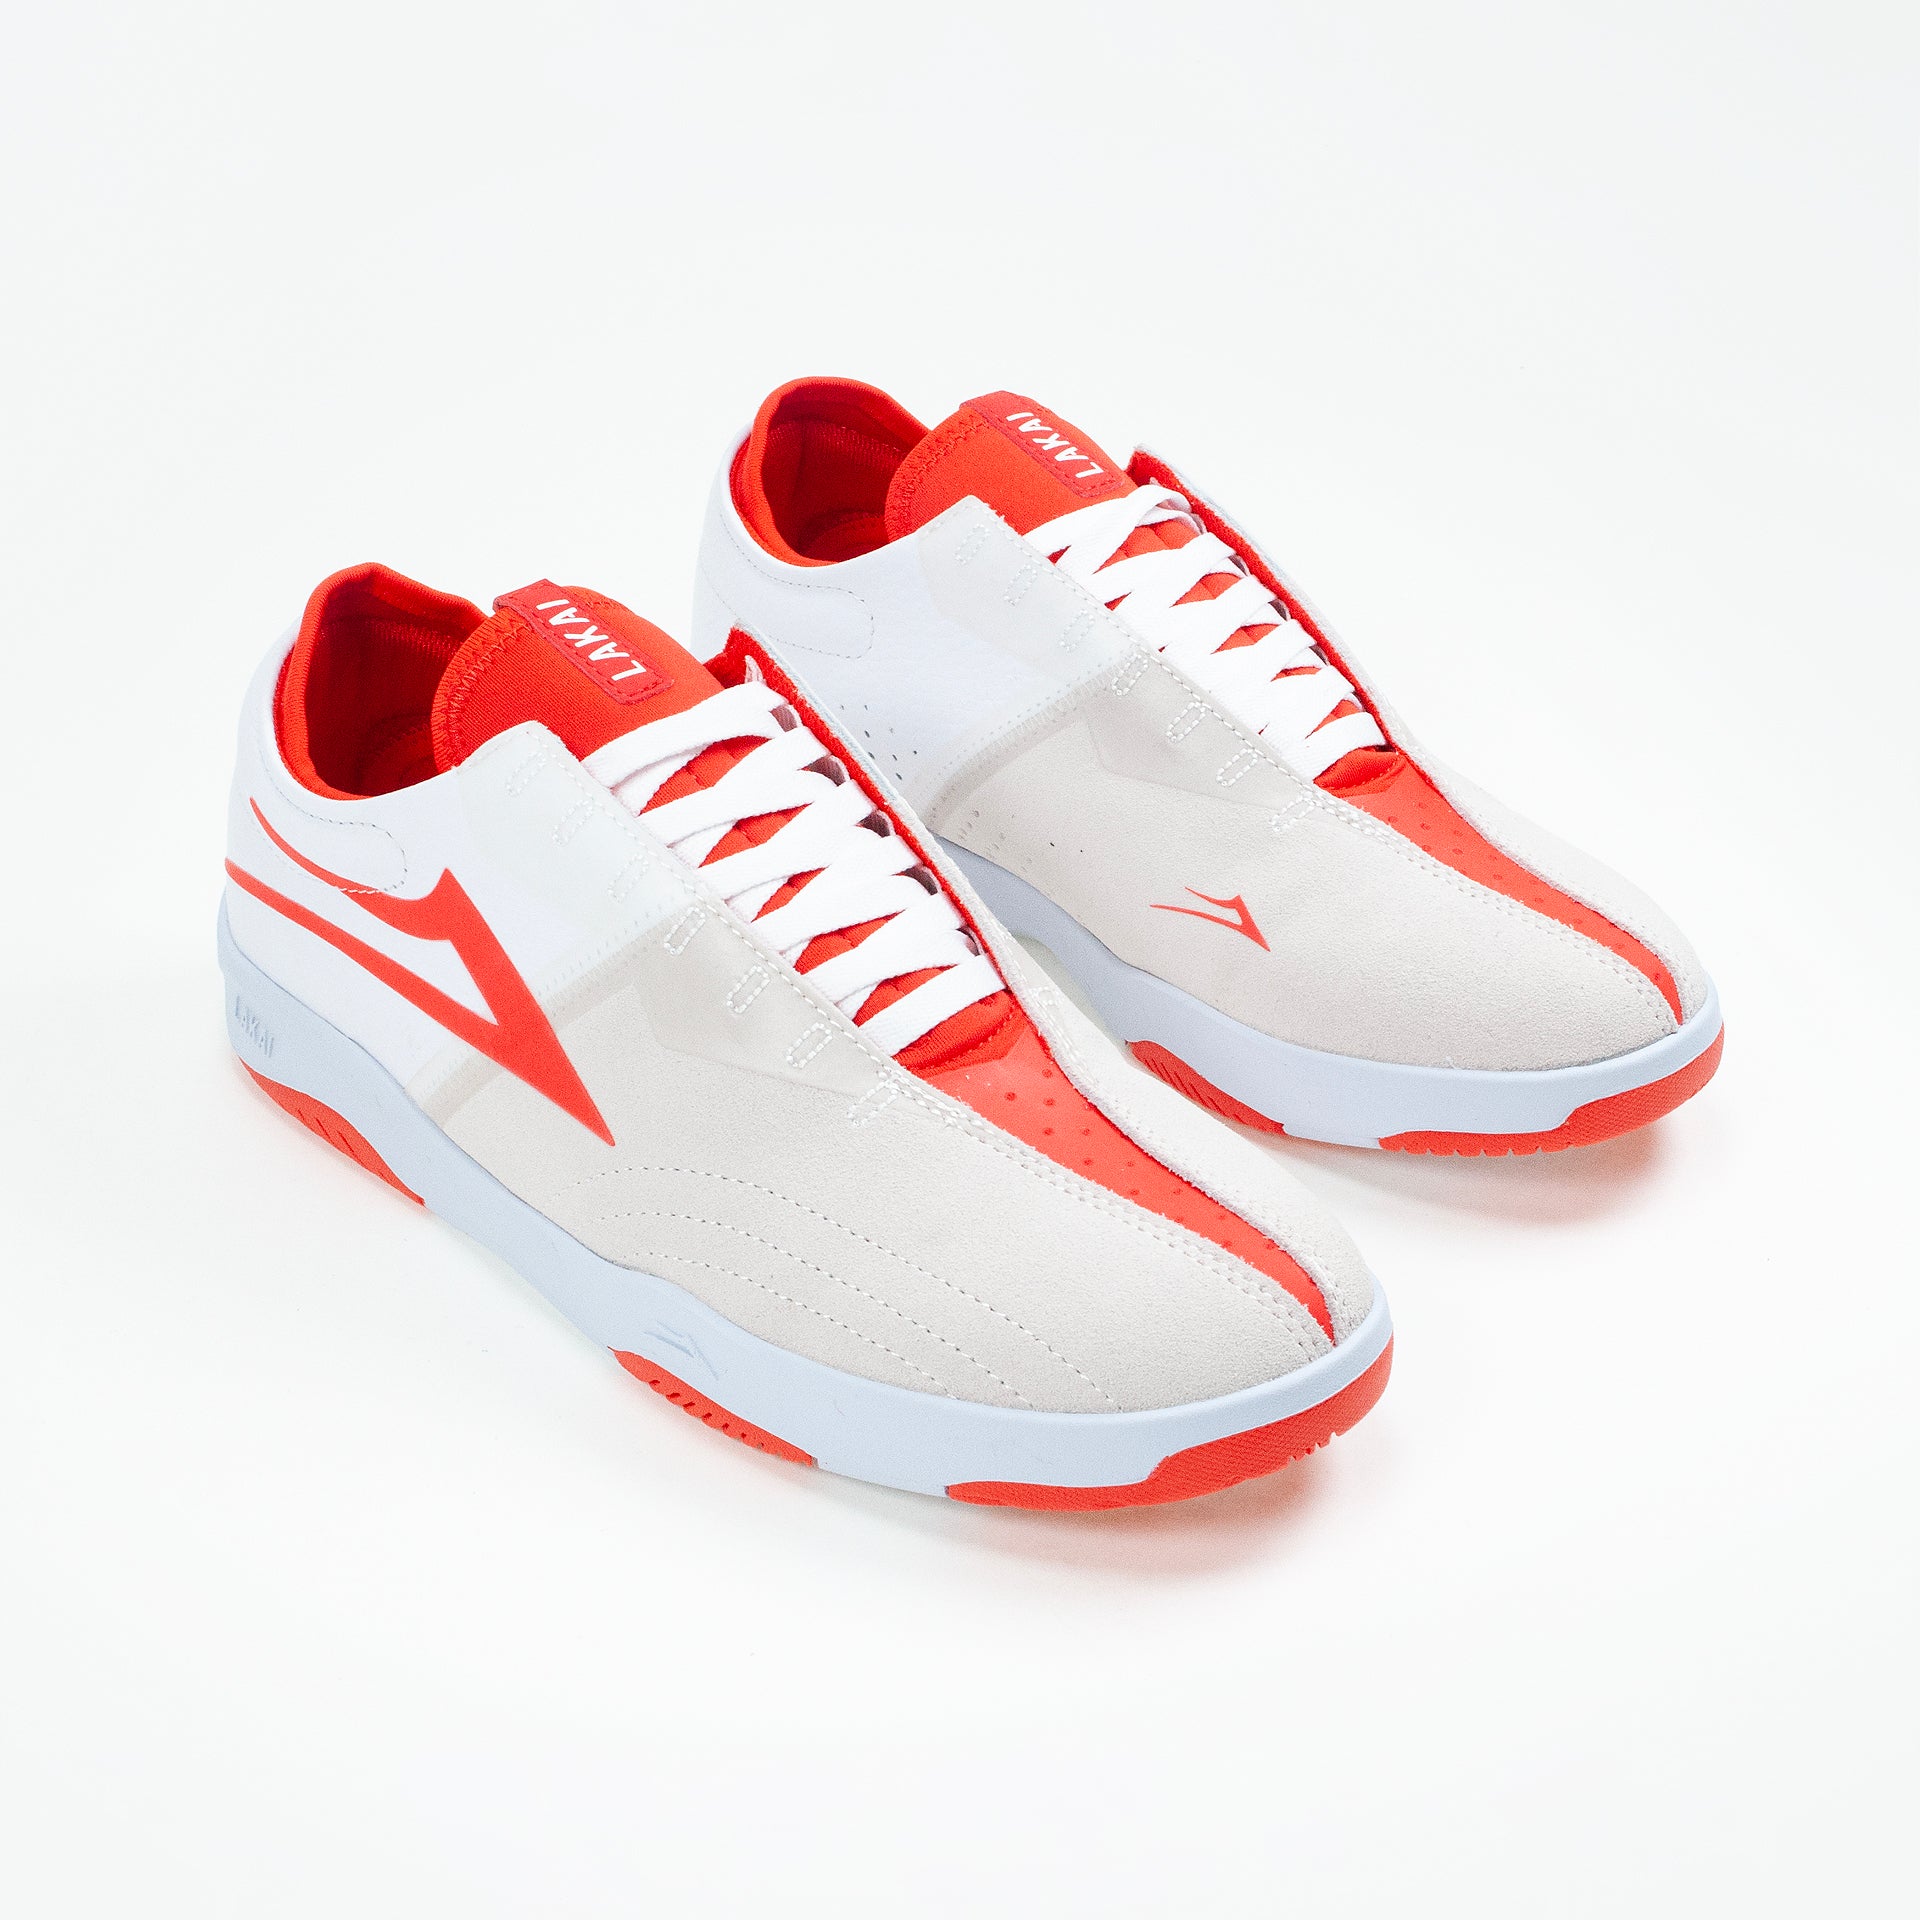 Lakai Mod Cup Skate Shoe - White/ Flame - Prime Delux Store